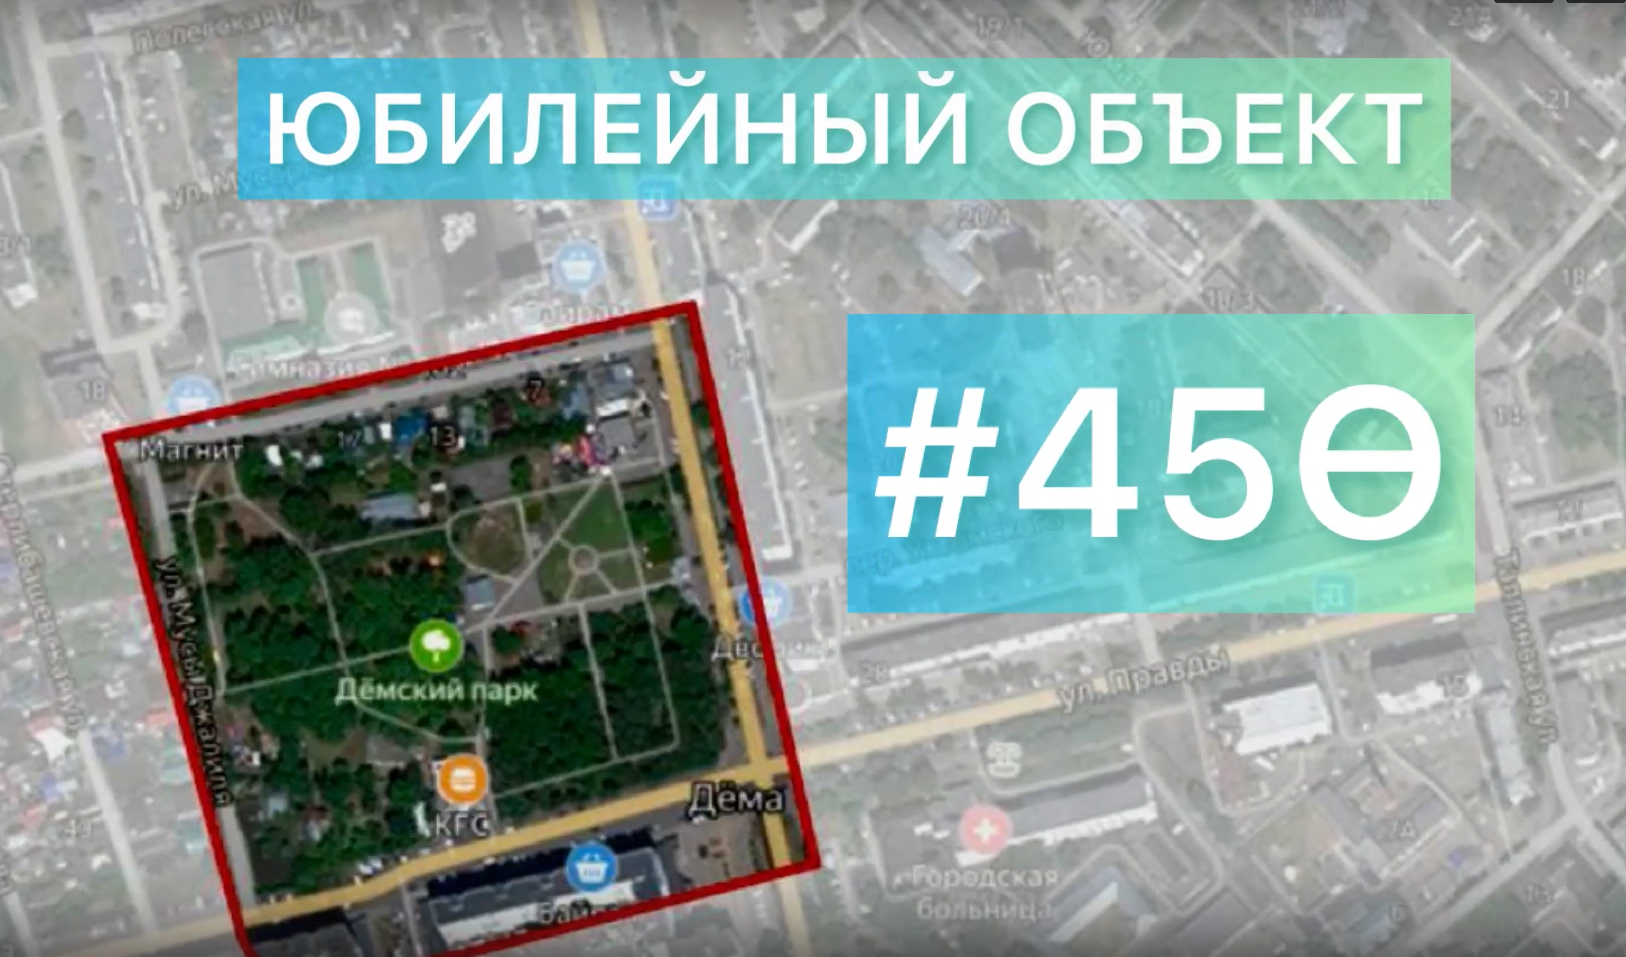 Глава администрации Демского района Айдар Базгудинов рассказал о ходе реконструкции парка